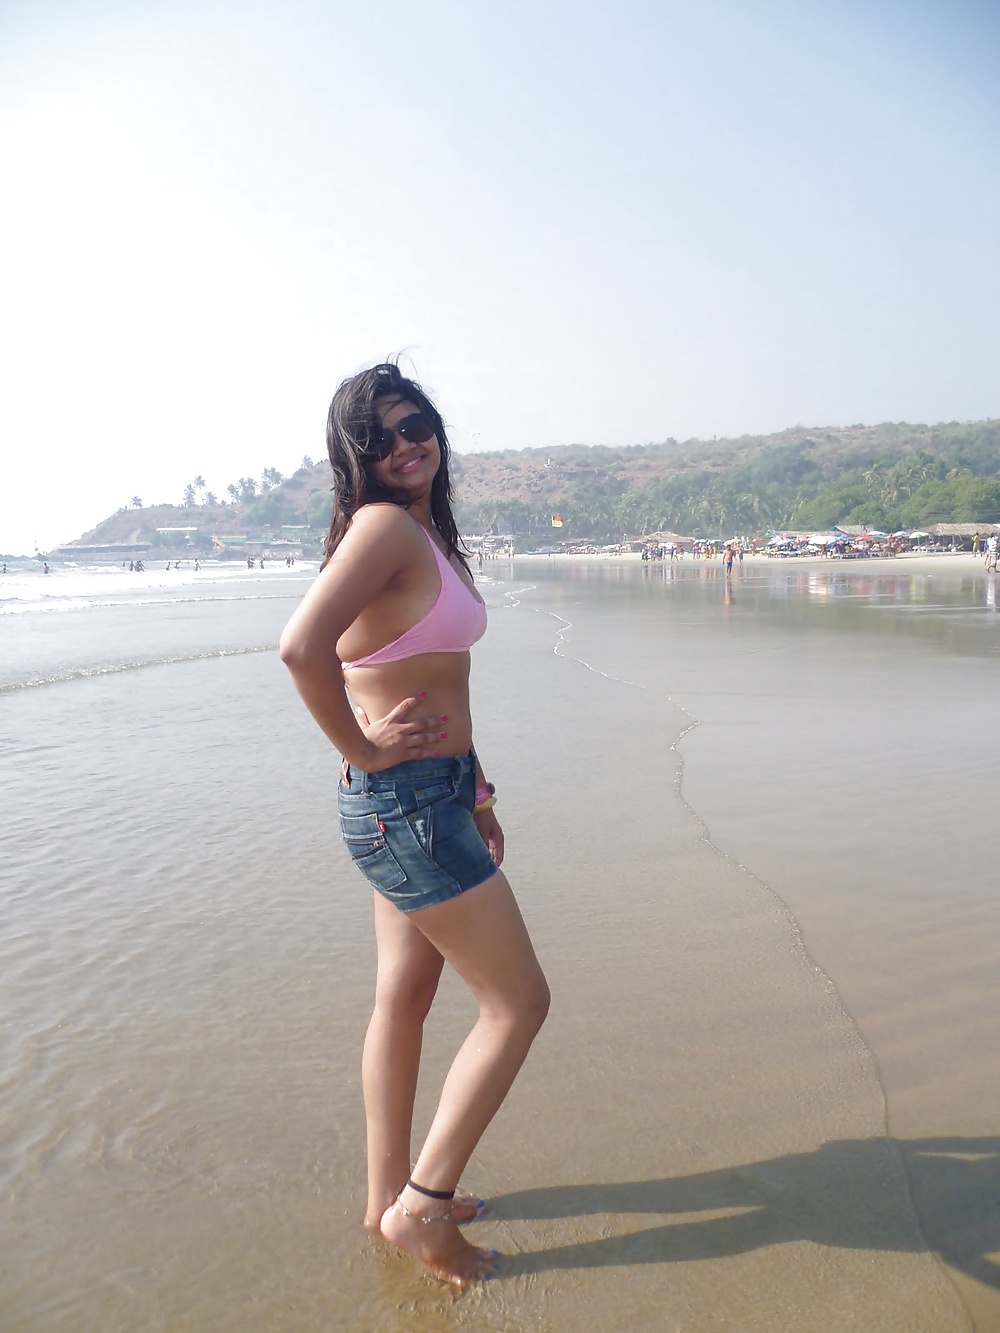 Goa vacanza hot pics di ragazze indiane
 #27361489